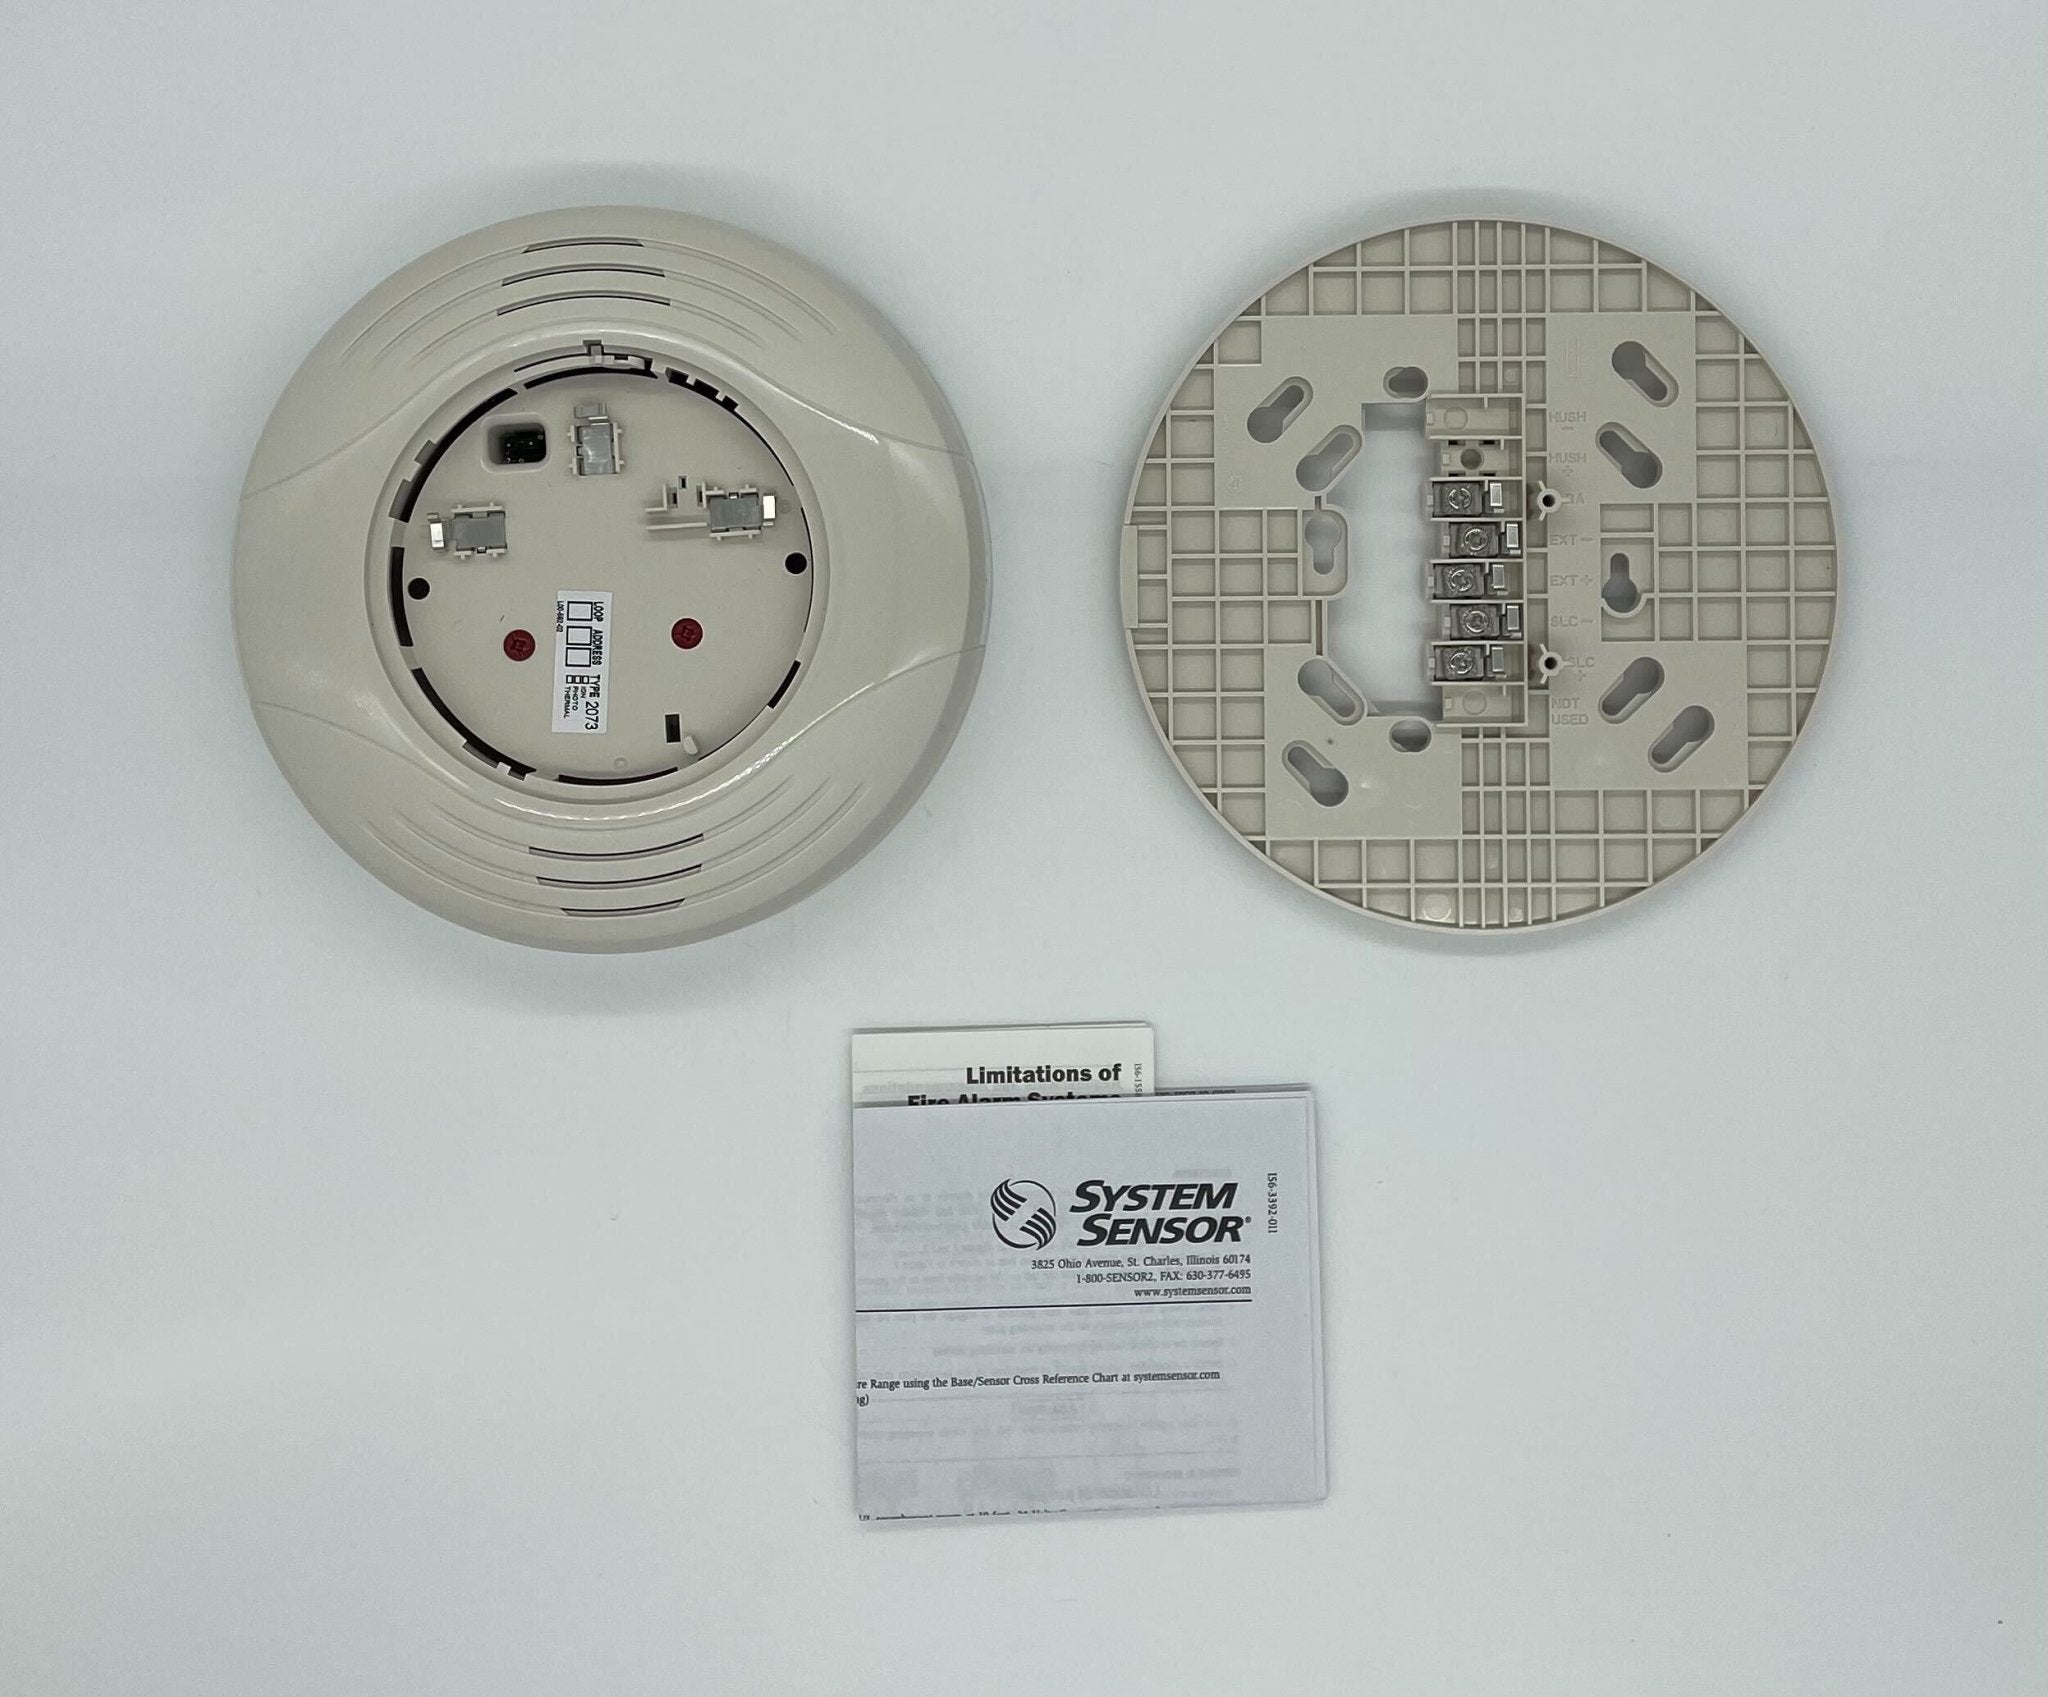 System Sensor B200S-IV - The Fire Alarm Supplier